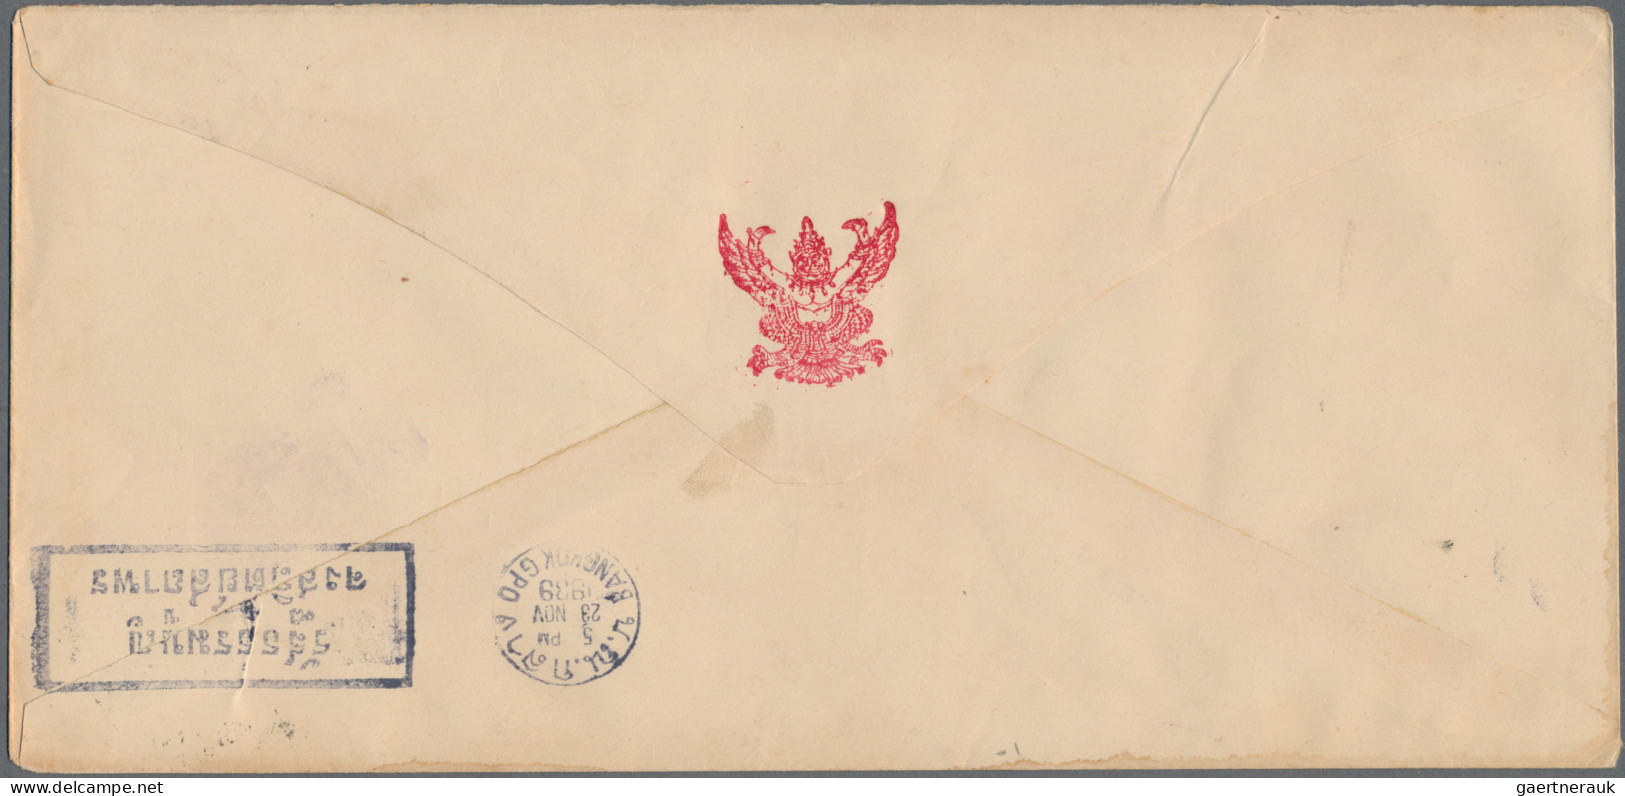 Thailand: 1940 "Jayabhûm": Official Mail Envelope With Garuda Imprint On Reverse - Thaïlande